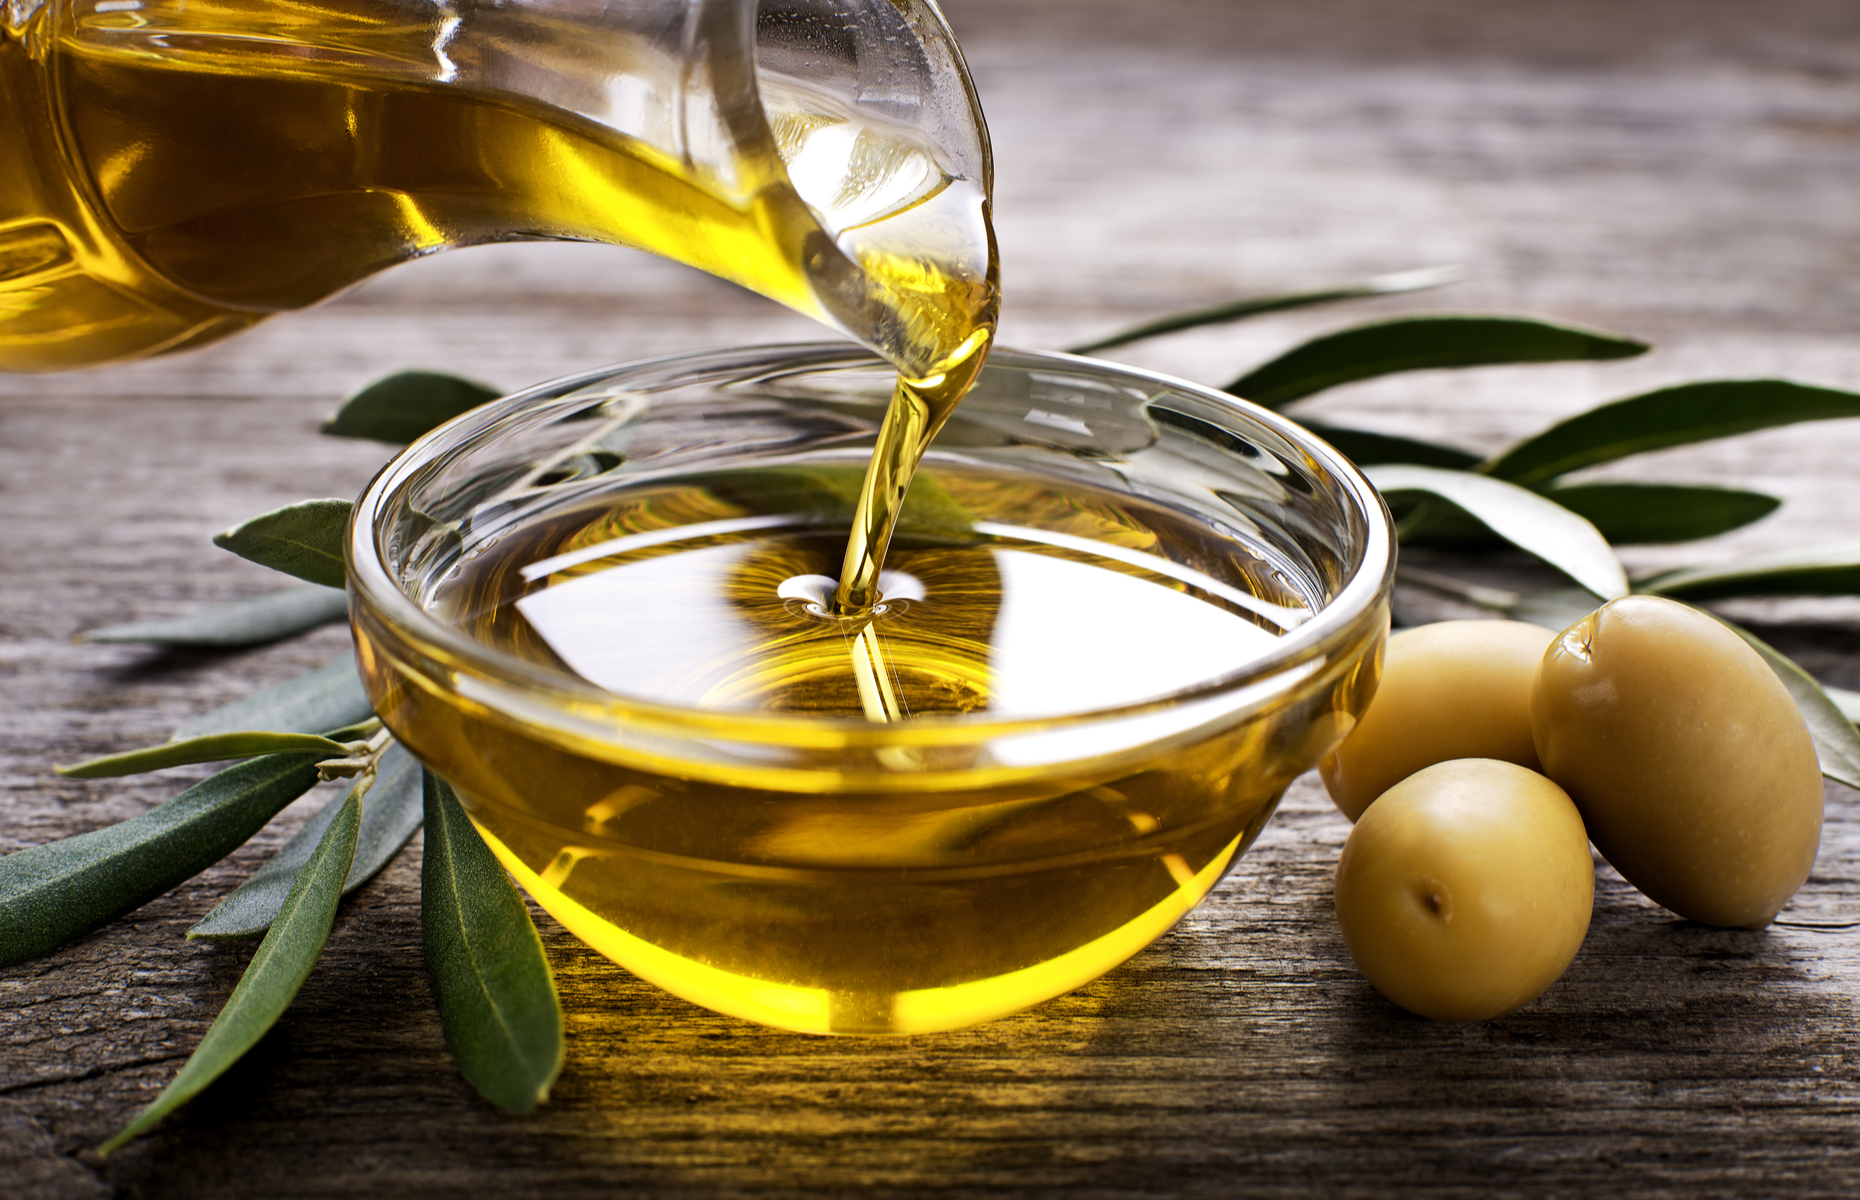 A dish of olive oil (Image: DUSAN ZIDAR/Shutterstock)